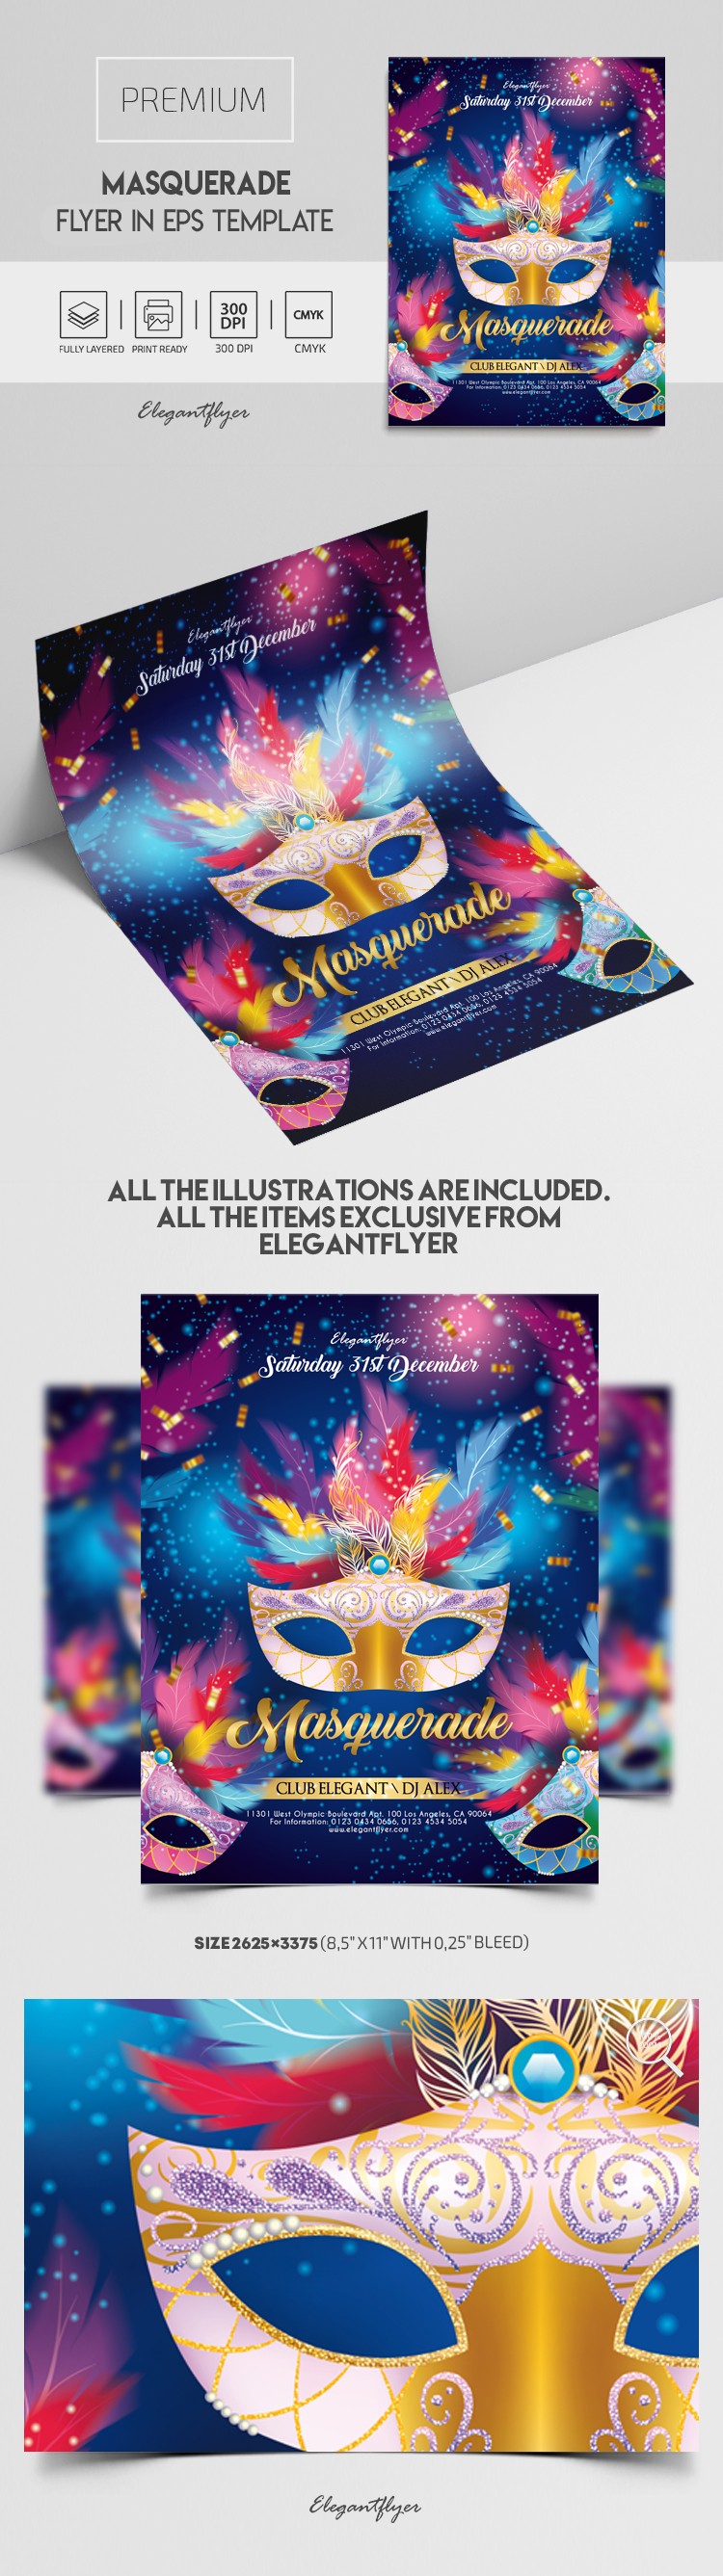 Volantino Masquerade in formato EPS by ElegantFlyer